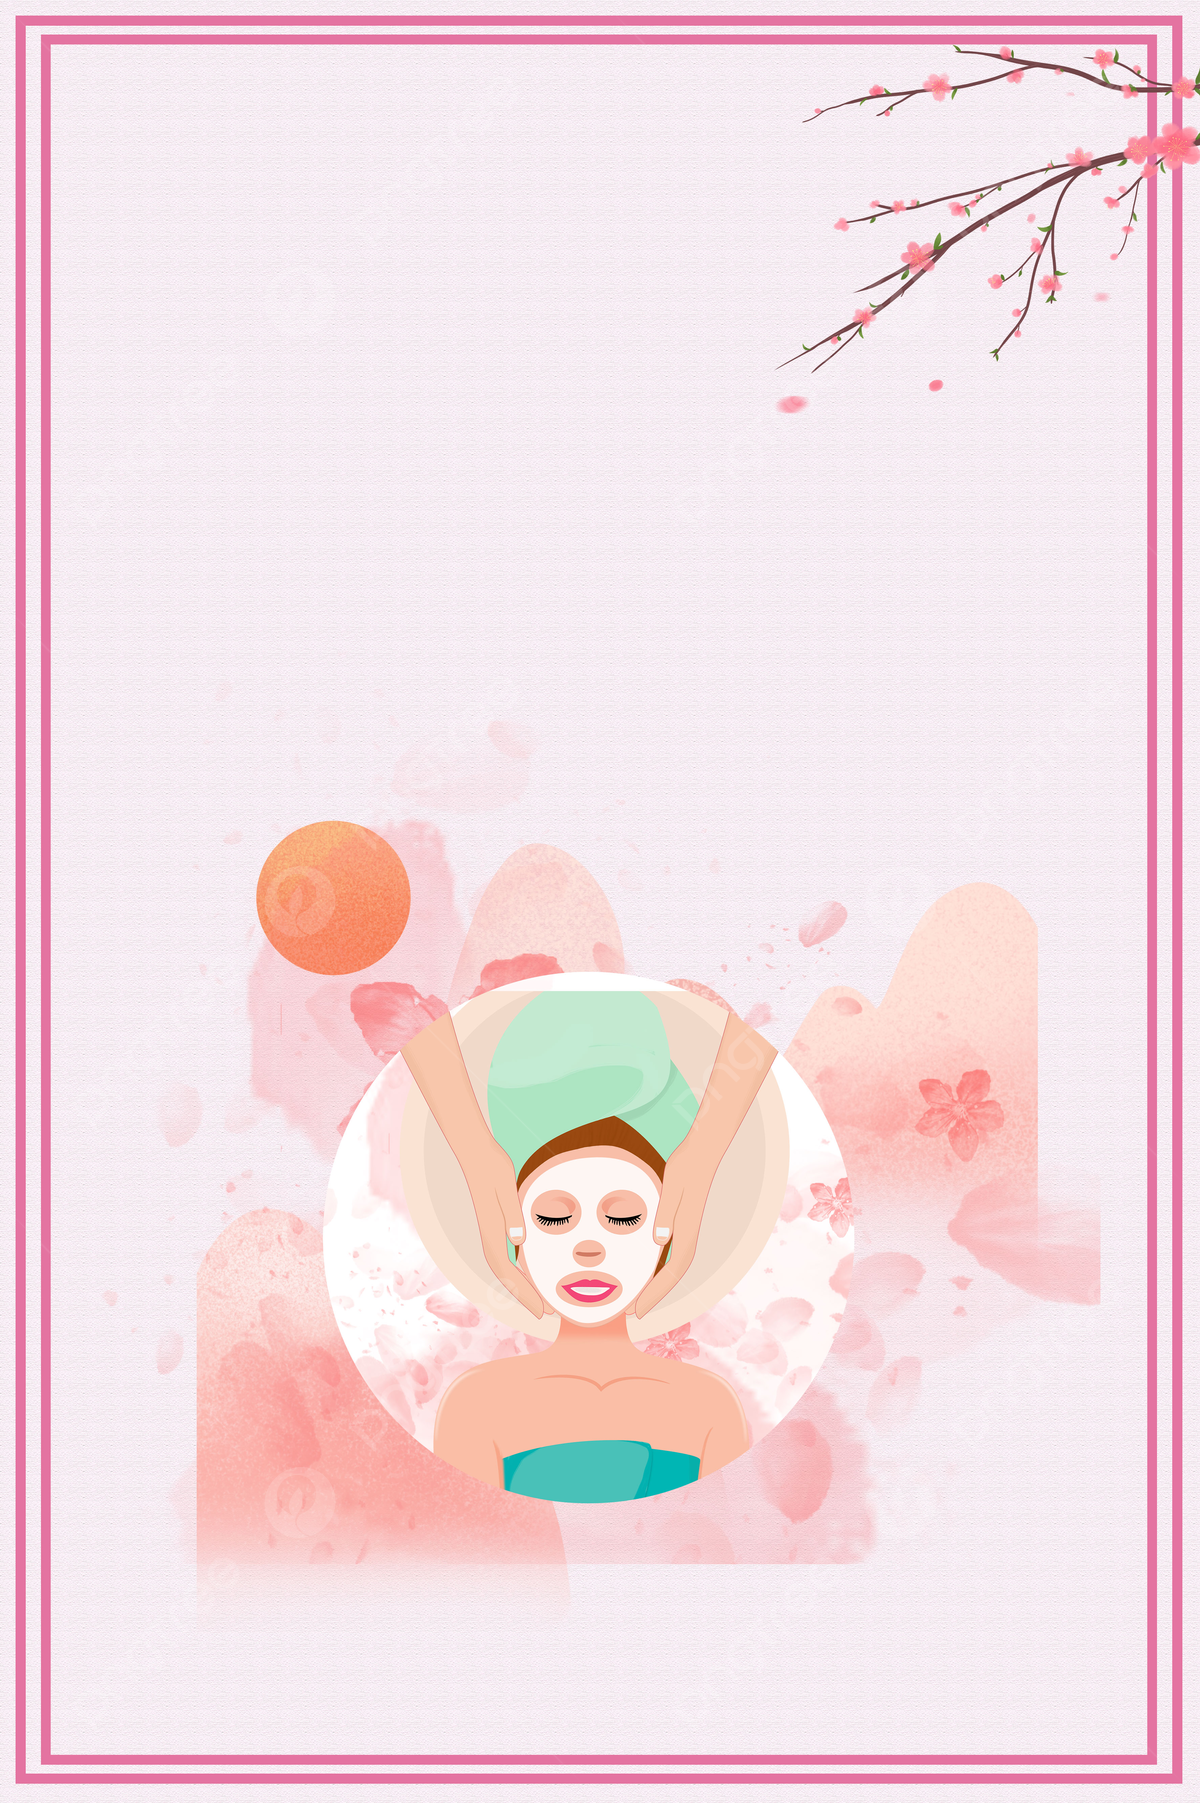  Schönheit Hintergrundbild 1200x1803. Creative Aesthetic Beauty Salon Skin Care Background Wallpaper Image For Free Download